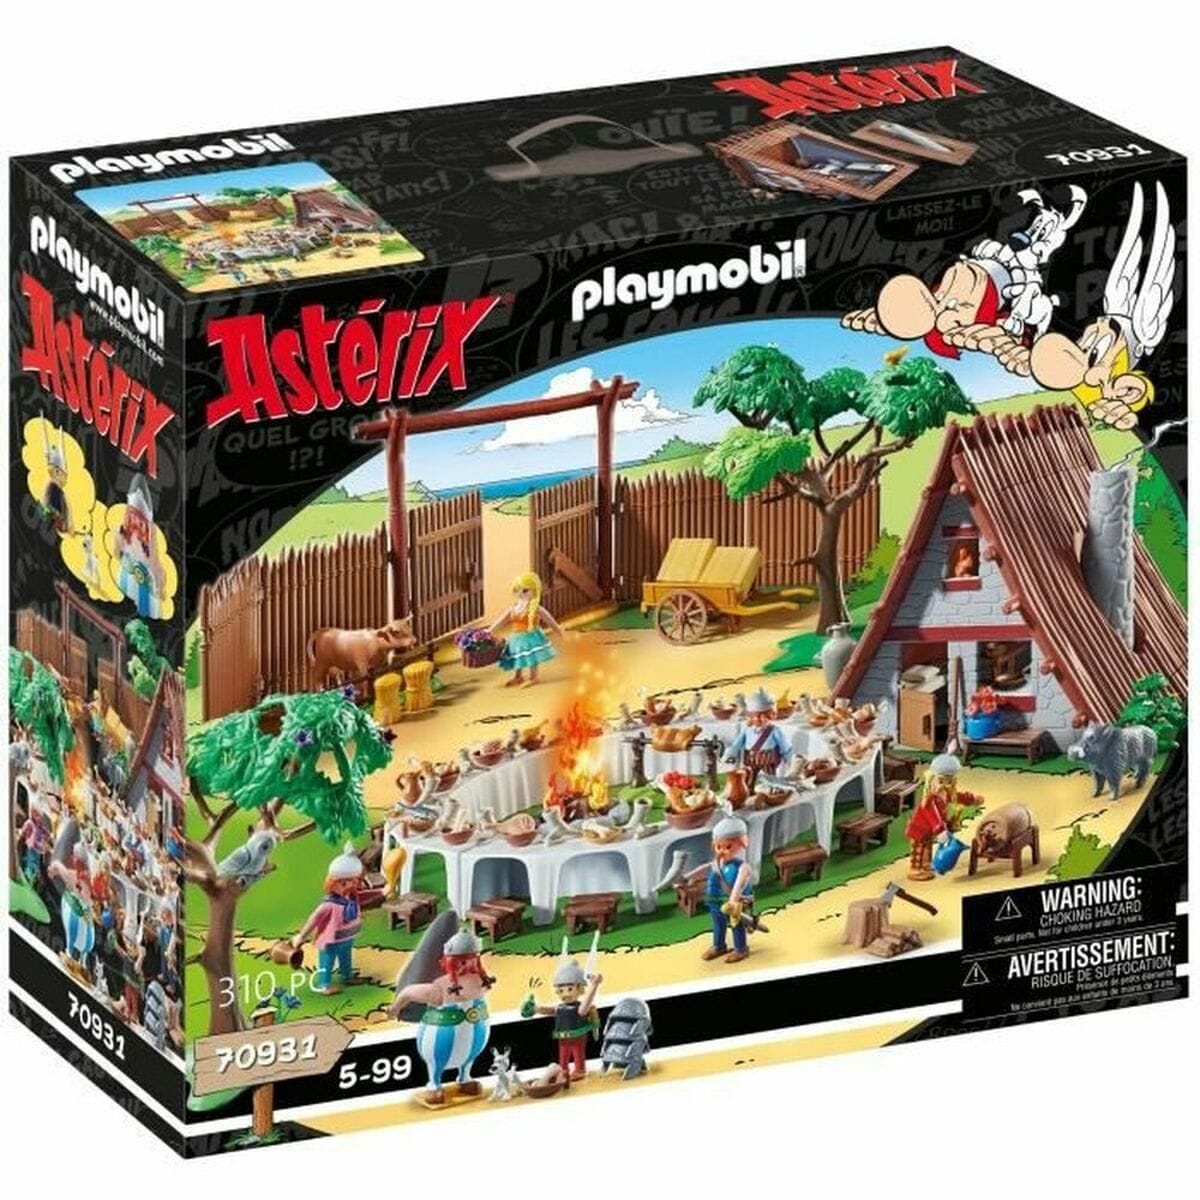 Playmobil Spielzeug | Kostüme > Spielzeug und Spiele > Weiteres spielzeug Playset Playmobil 70931 Astérix Dorf